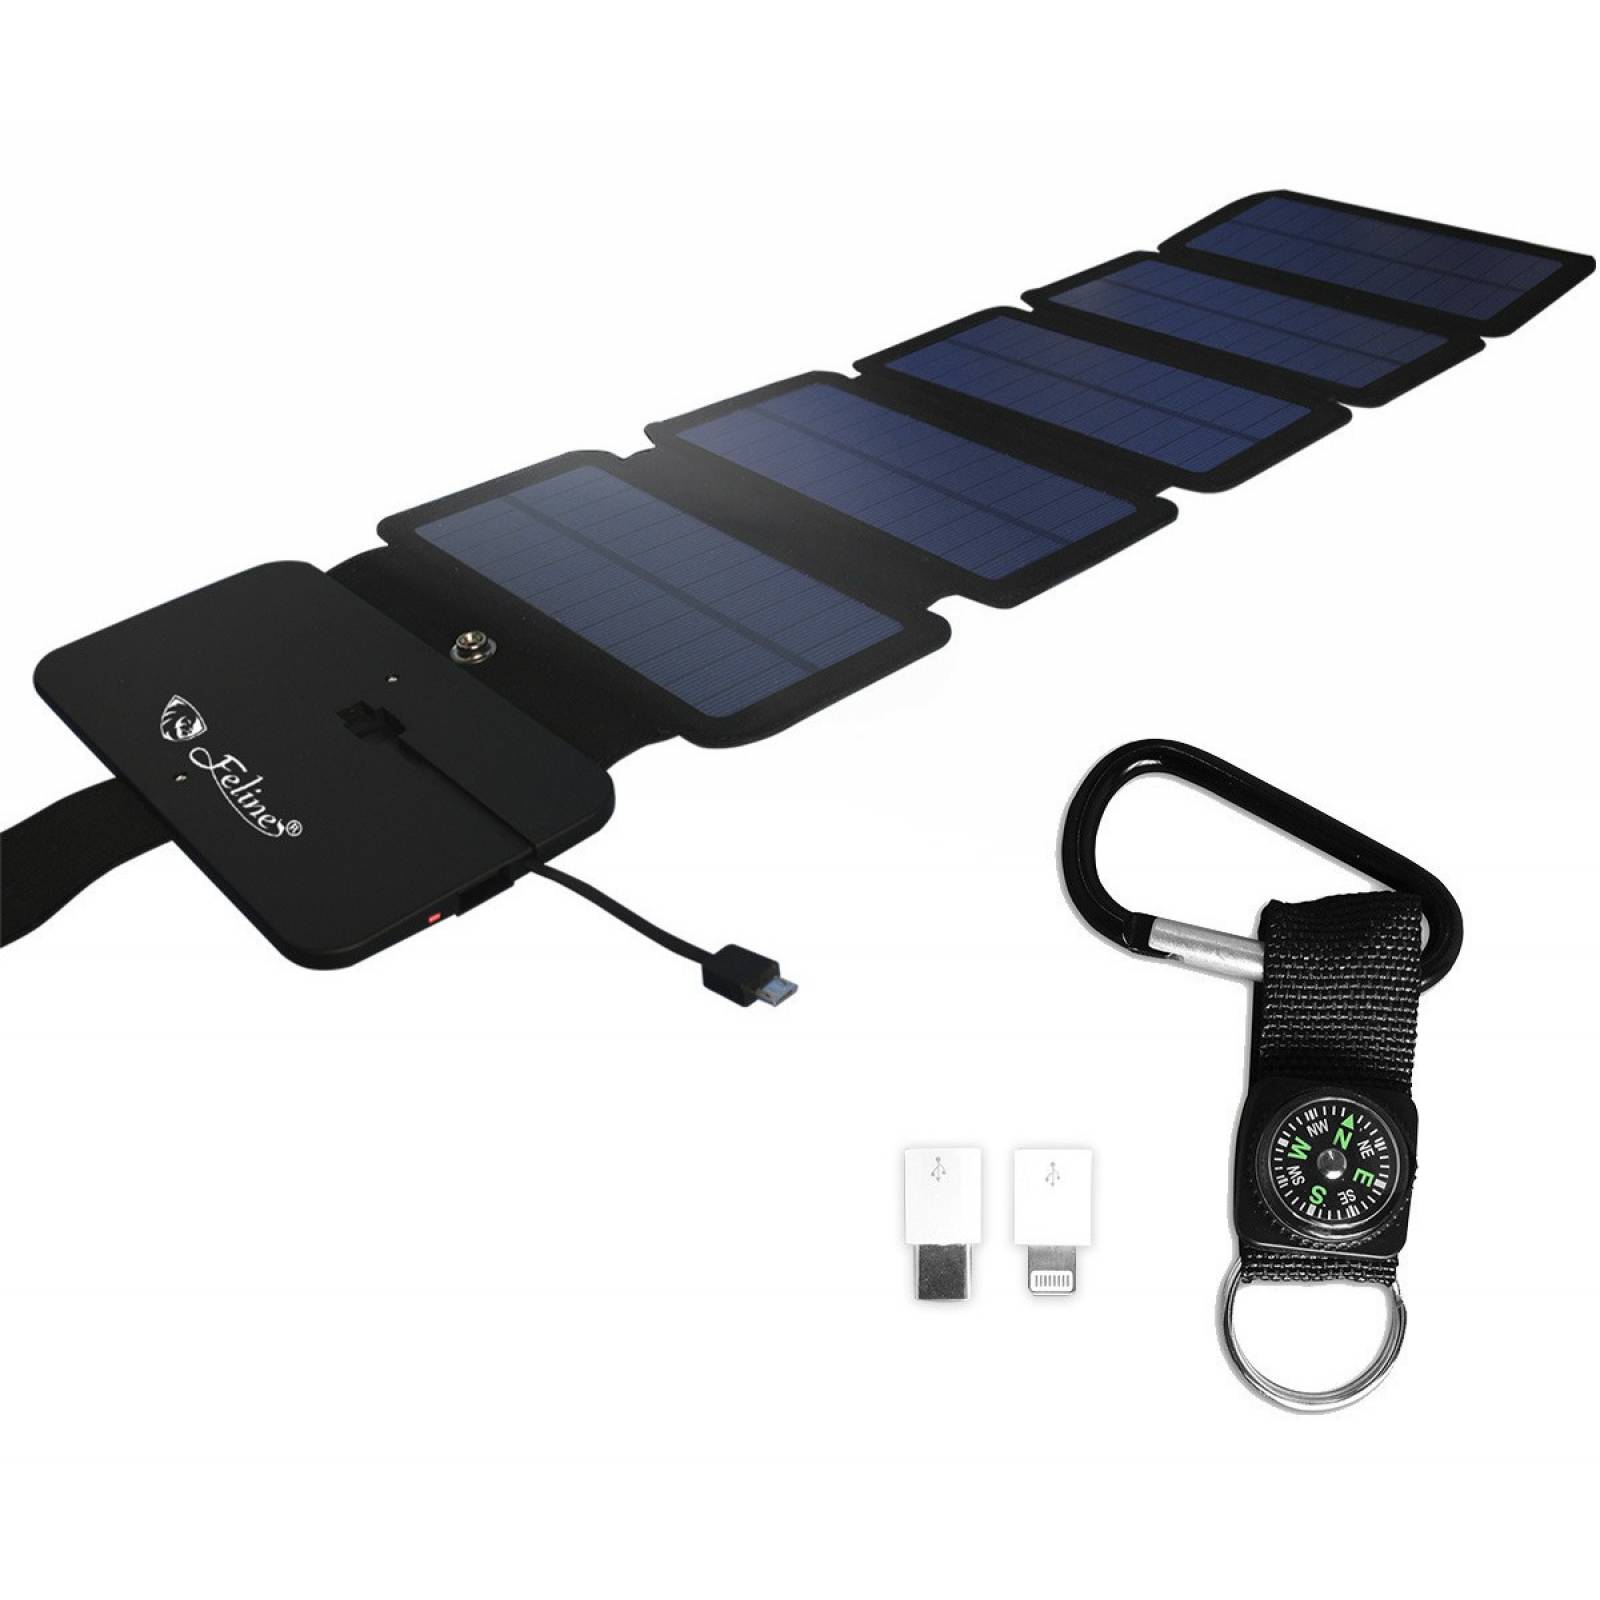 Cargador Solar 5 Celdas Portatil Usb Celular iPhone Android